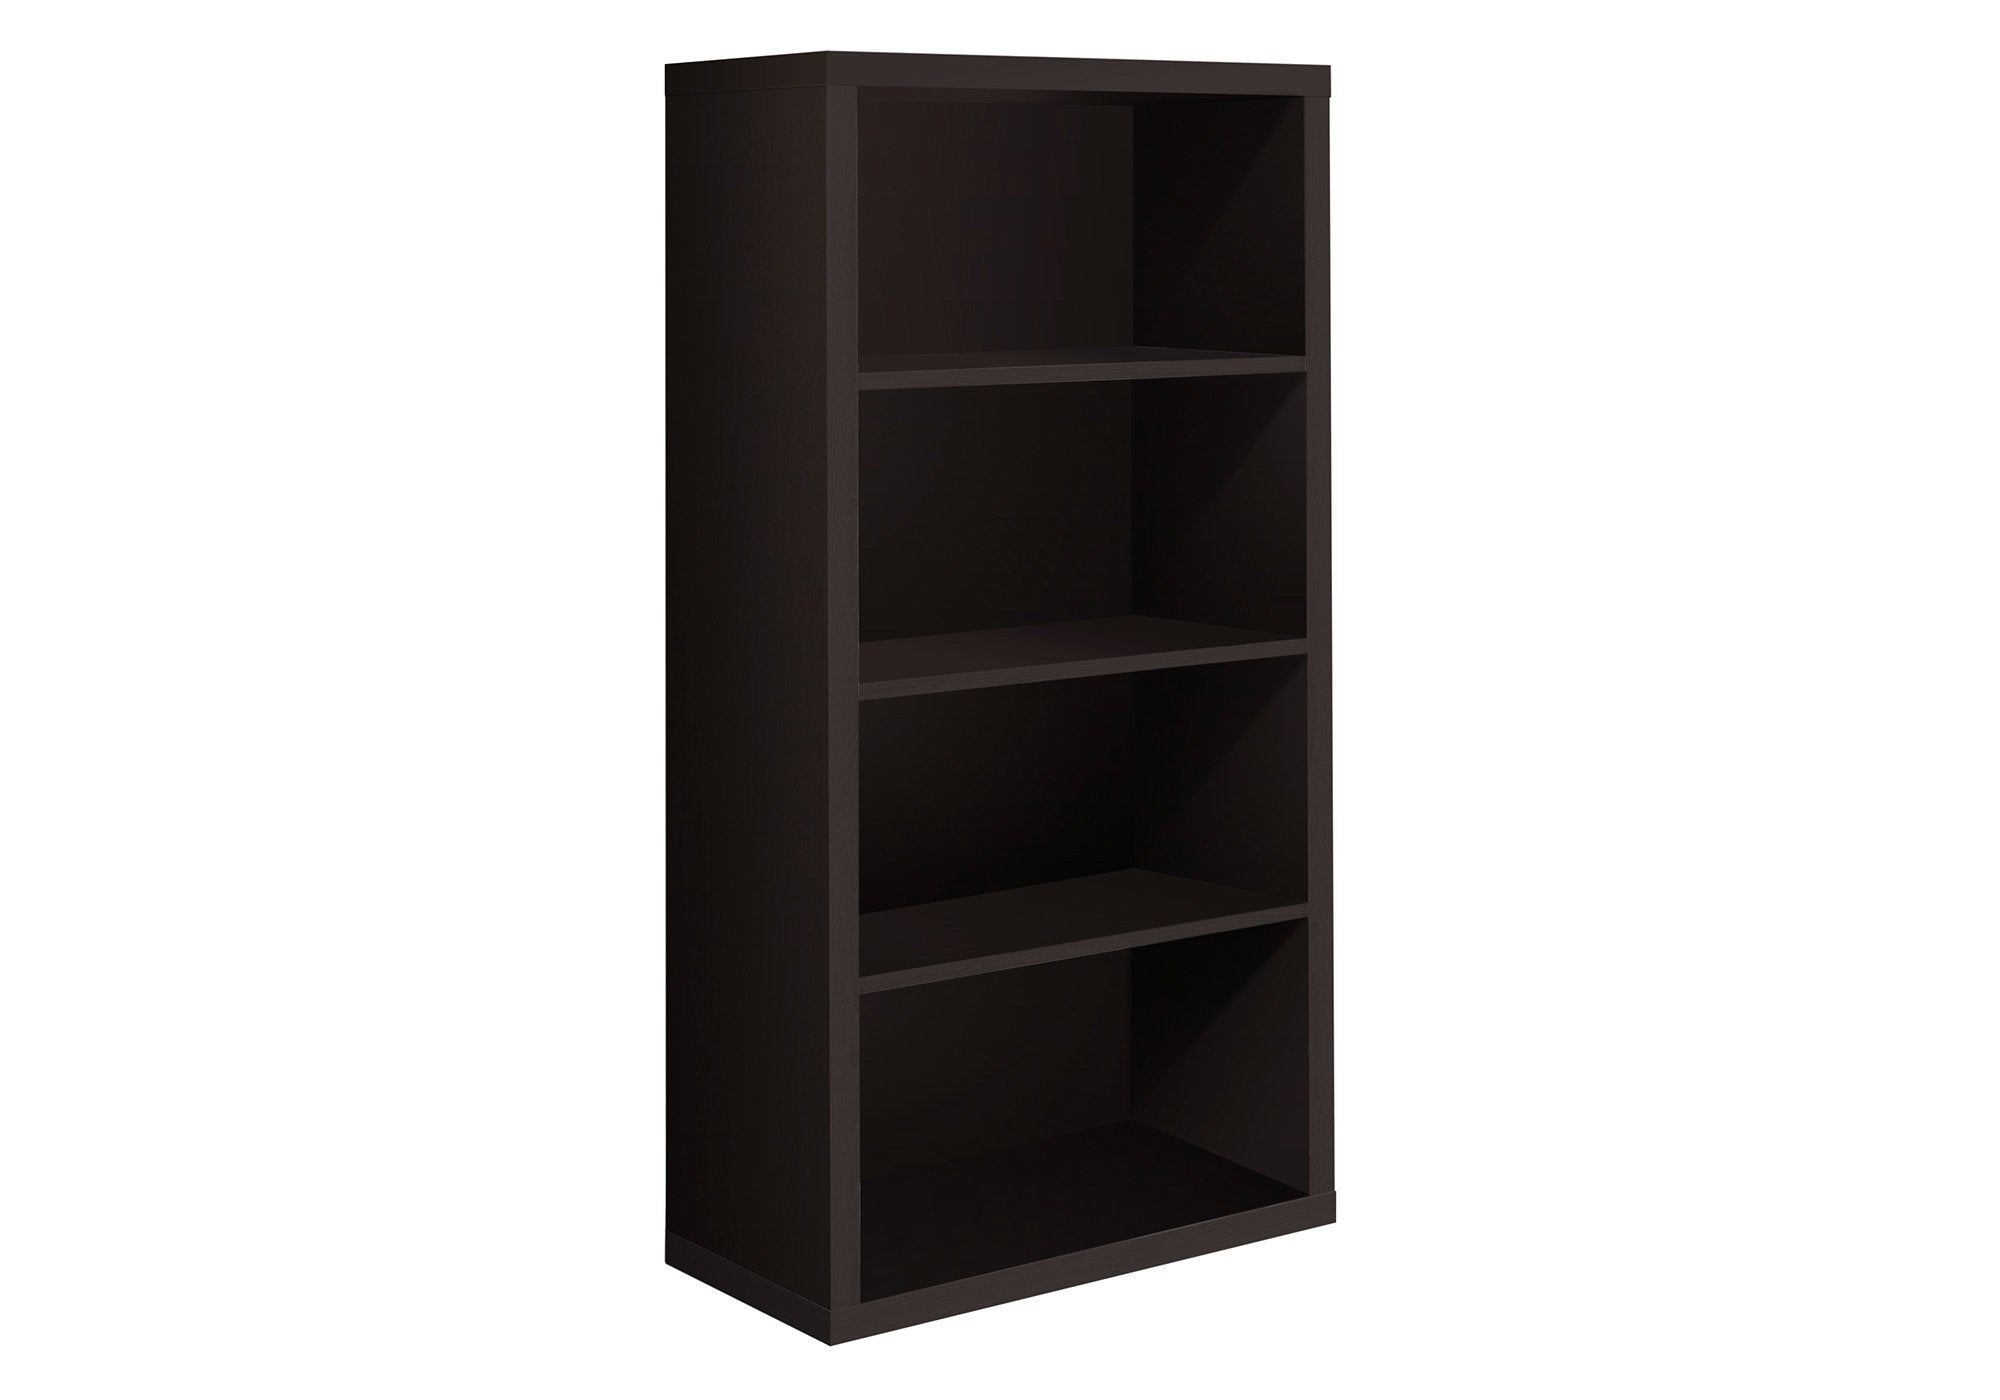 MN-677005    Bookshelf, Bookcase, Etagere, 5 Tier, Office, Bedroom, 48"H, Laminate, Dark Brown, Contemporary, Modern